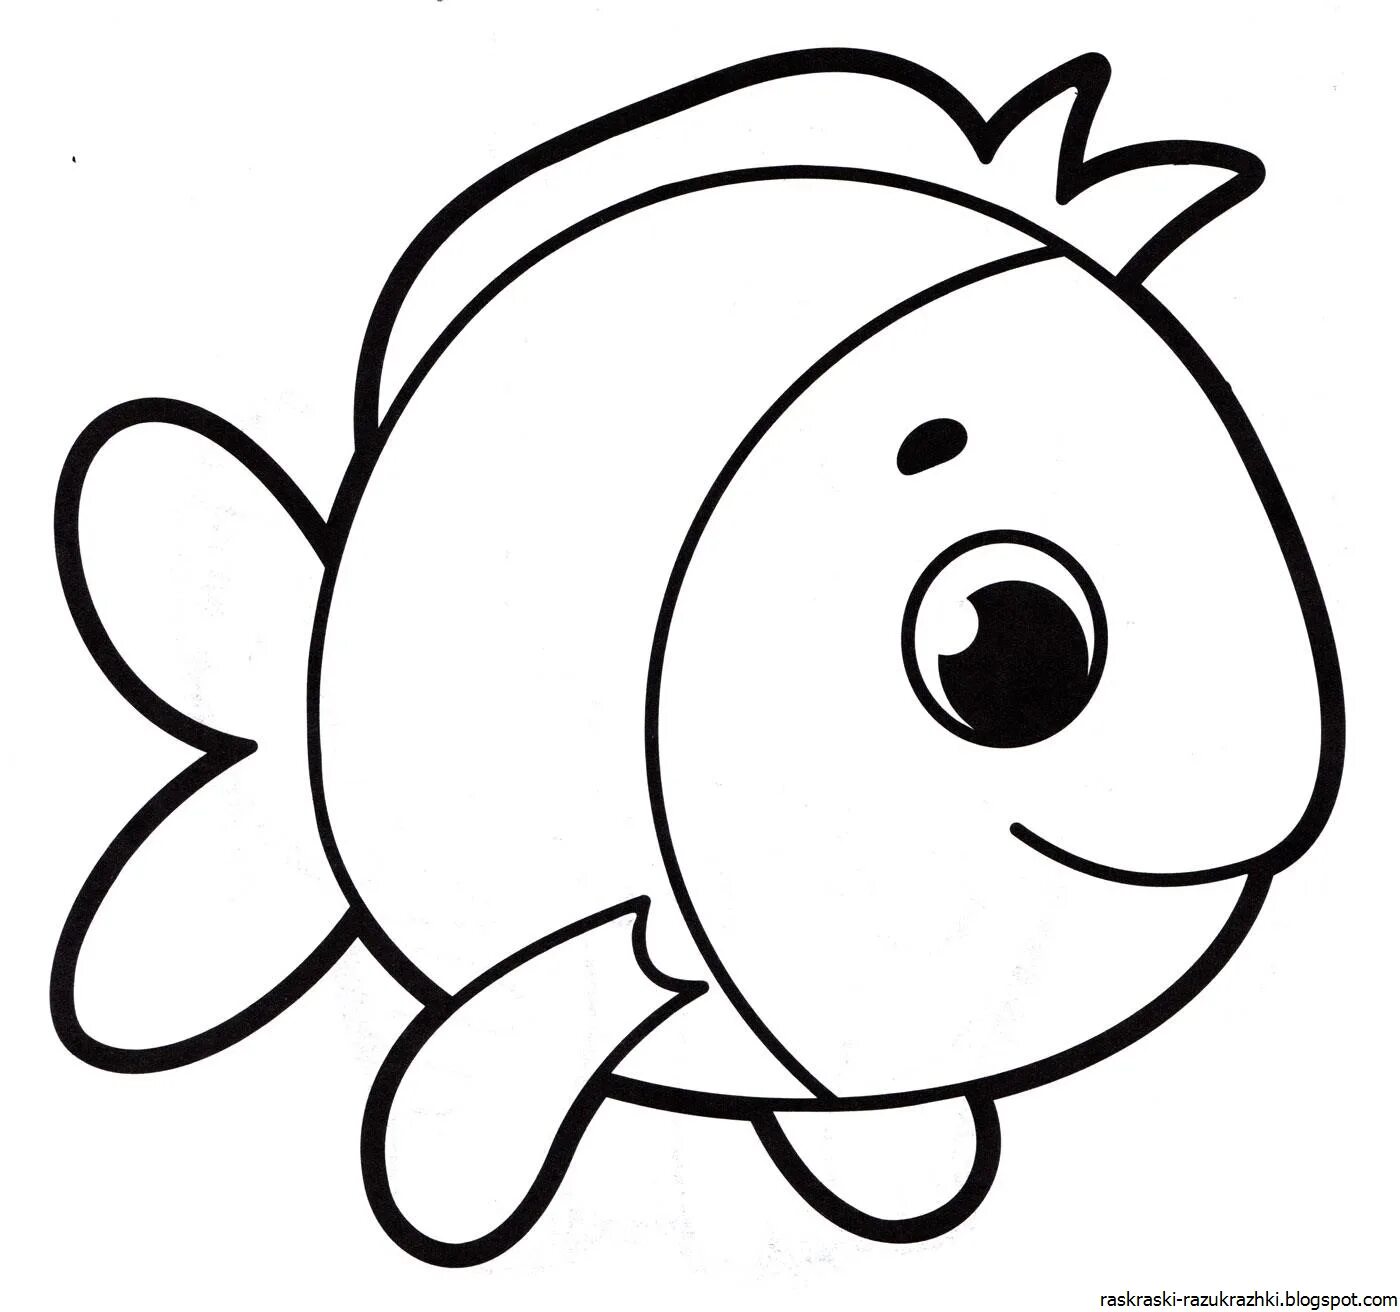 Раскраски рыбки для детей 3 4. Раскраска рыбка. Рыбка раскраска для детей. Рыбка для раскрашивания для детей. Рыбка картинка для детей раскраска.